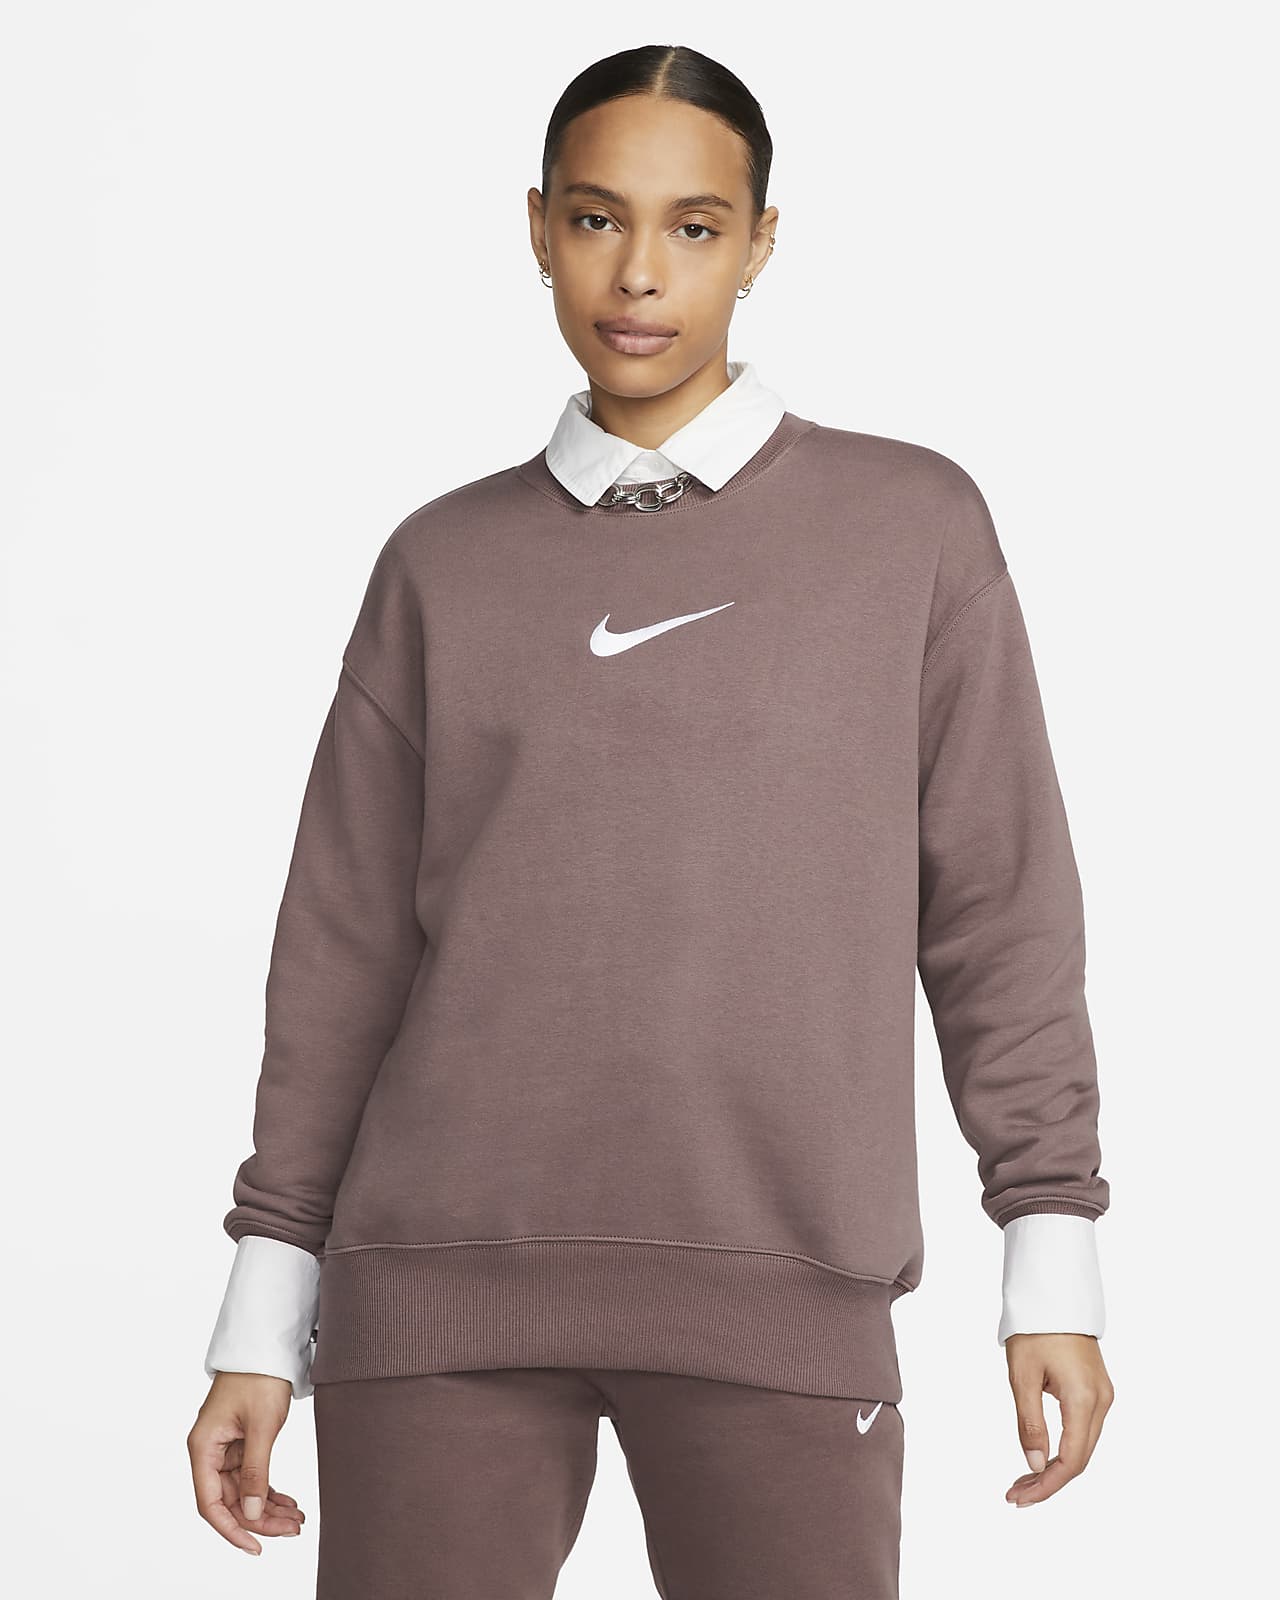 Aankondiging emulsie kooi Nike Sportswear Phoenix Fleece Oversized sweatshirt van fleece voor dames.  Nike NL